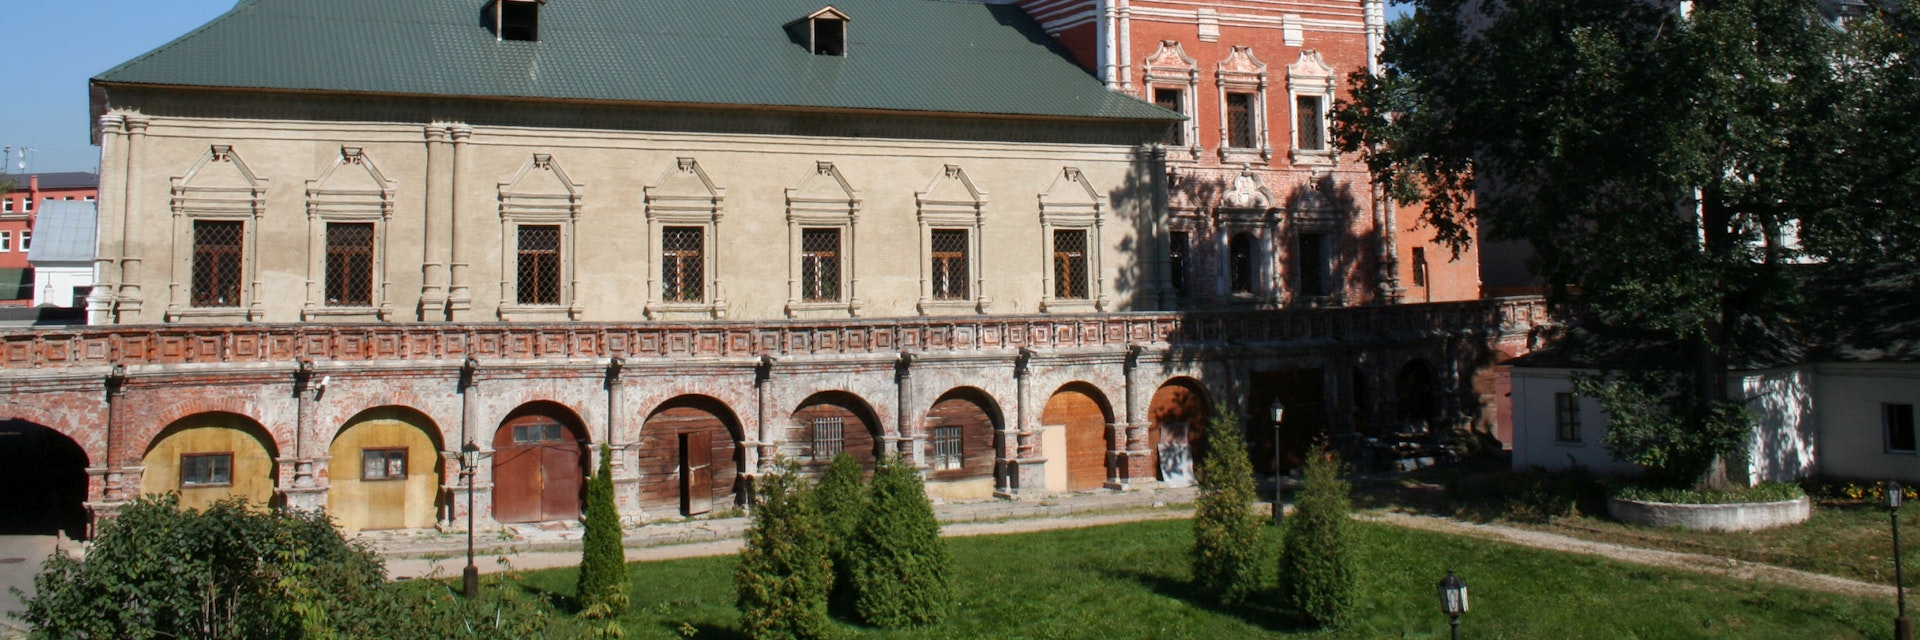 Exterior of Upper St Peter Monastery.